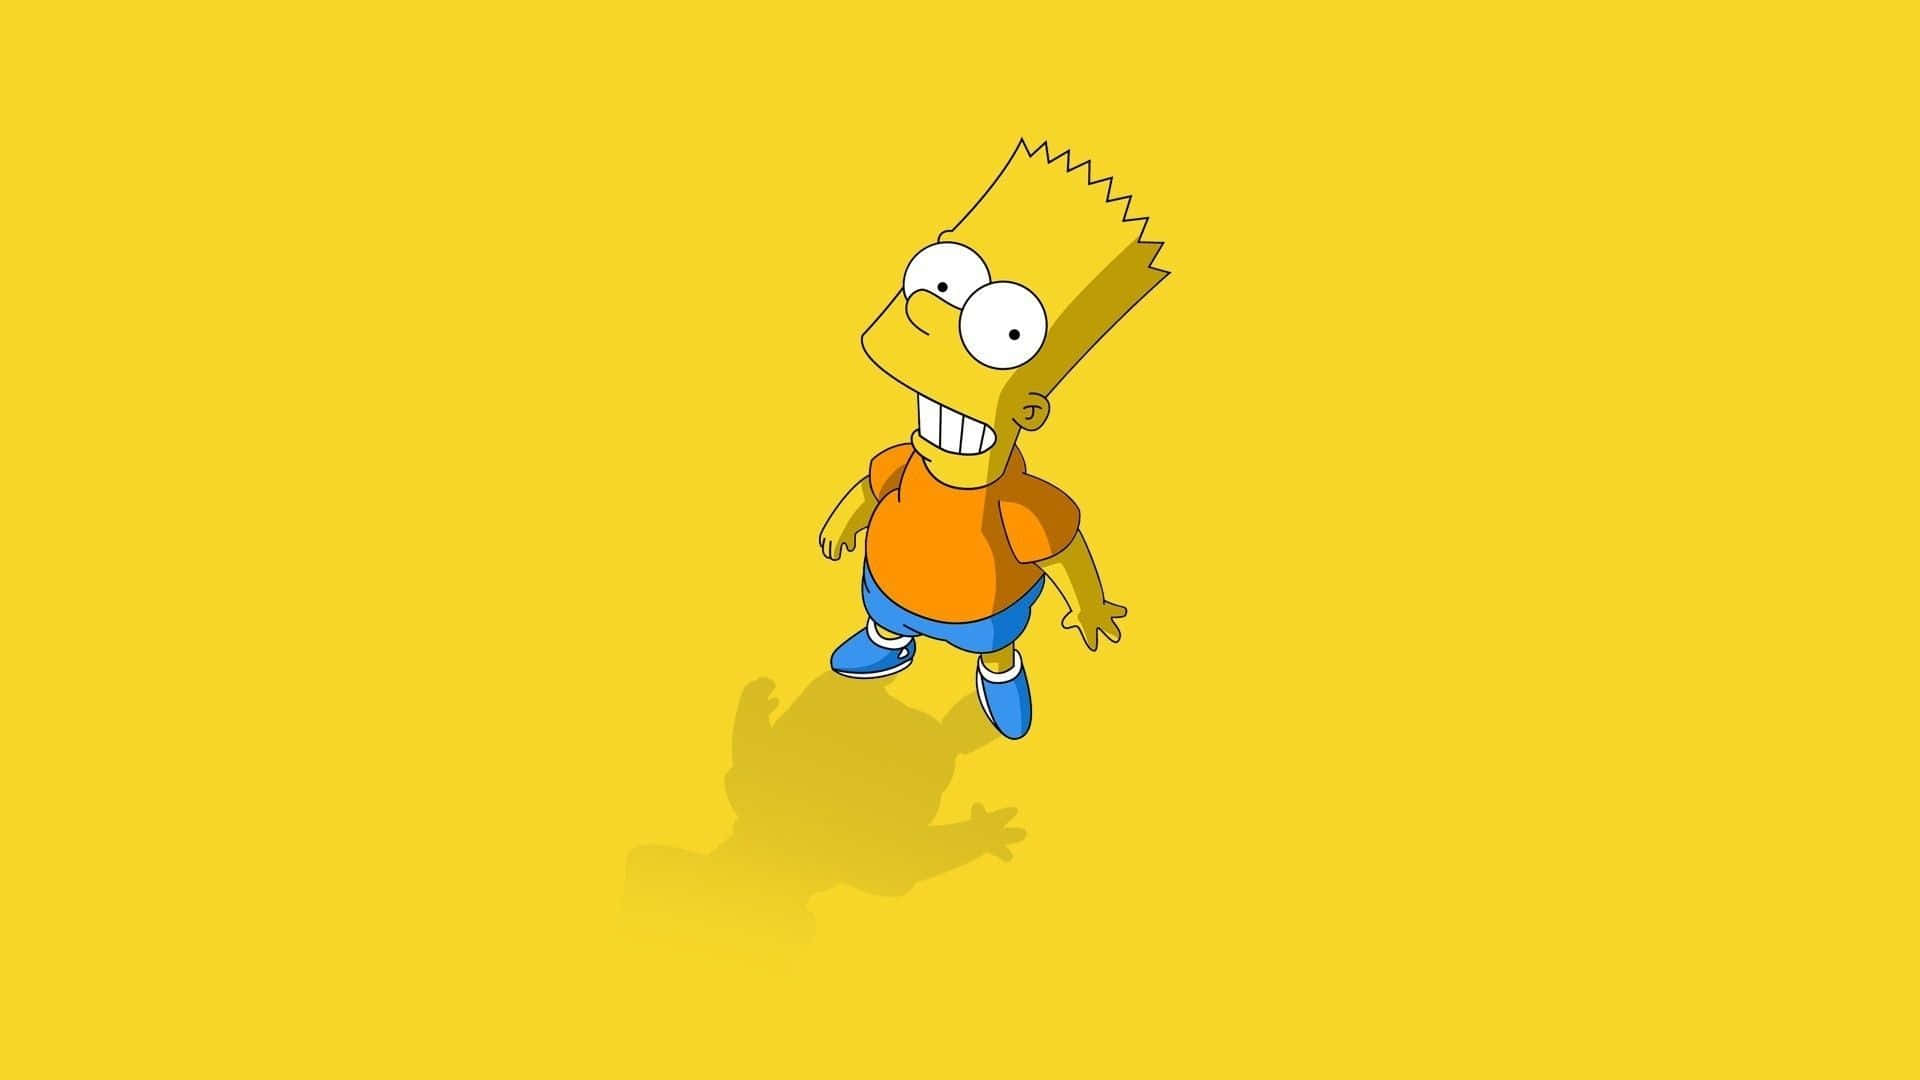 Free Bart Simpson Aesthetic Wallpaper Downloads, Bart Simpson Aesthetic Wallpaper for FREE